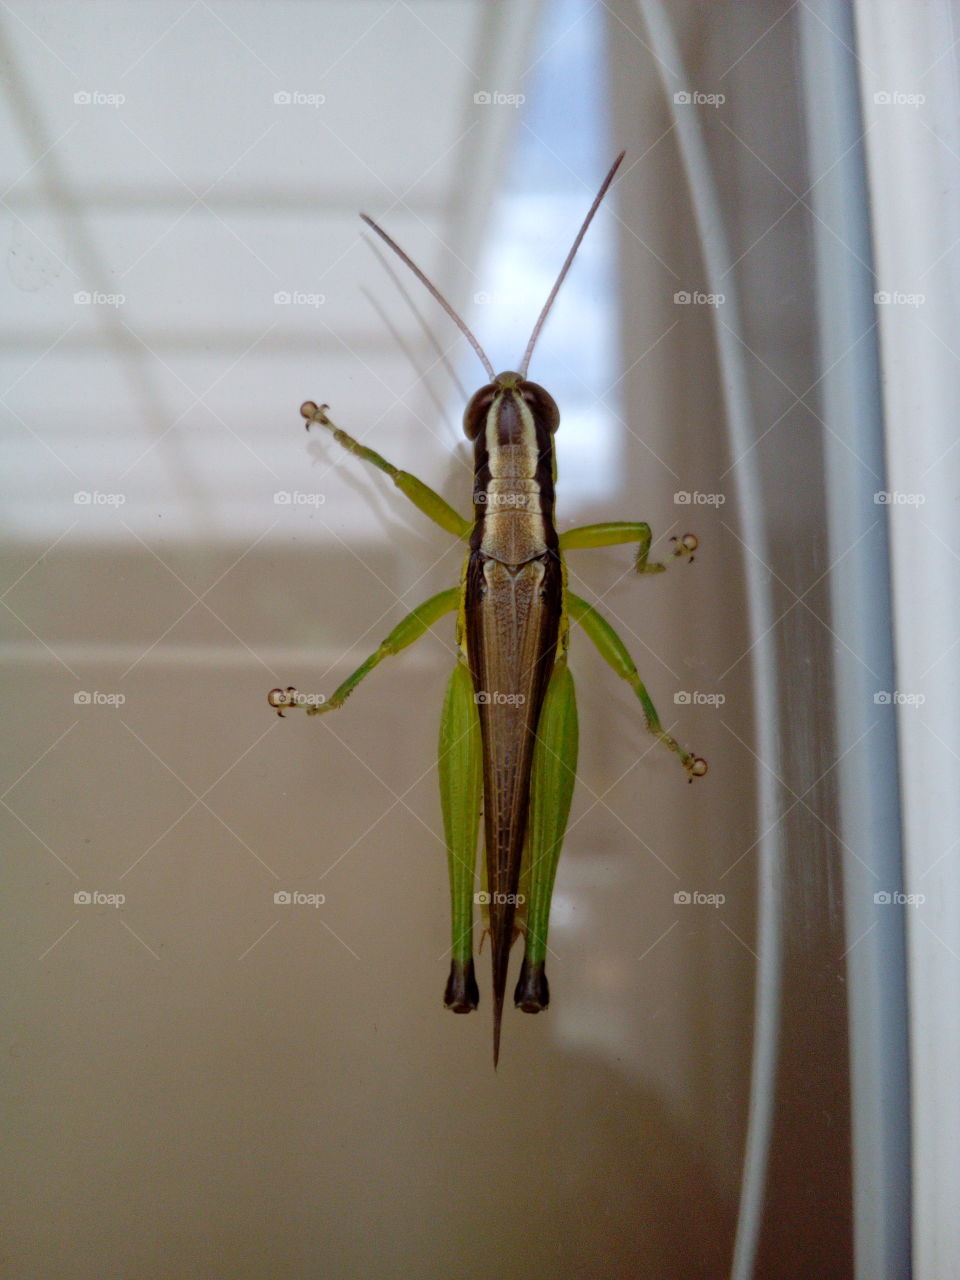 Green grasshopper on the window